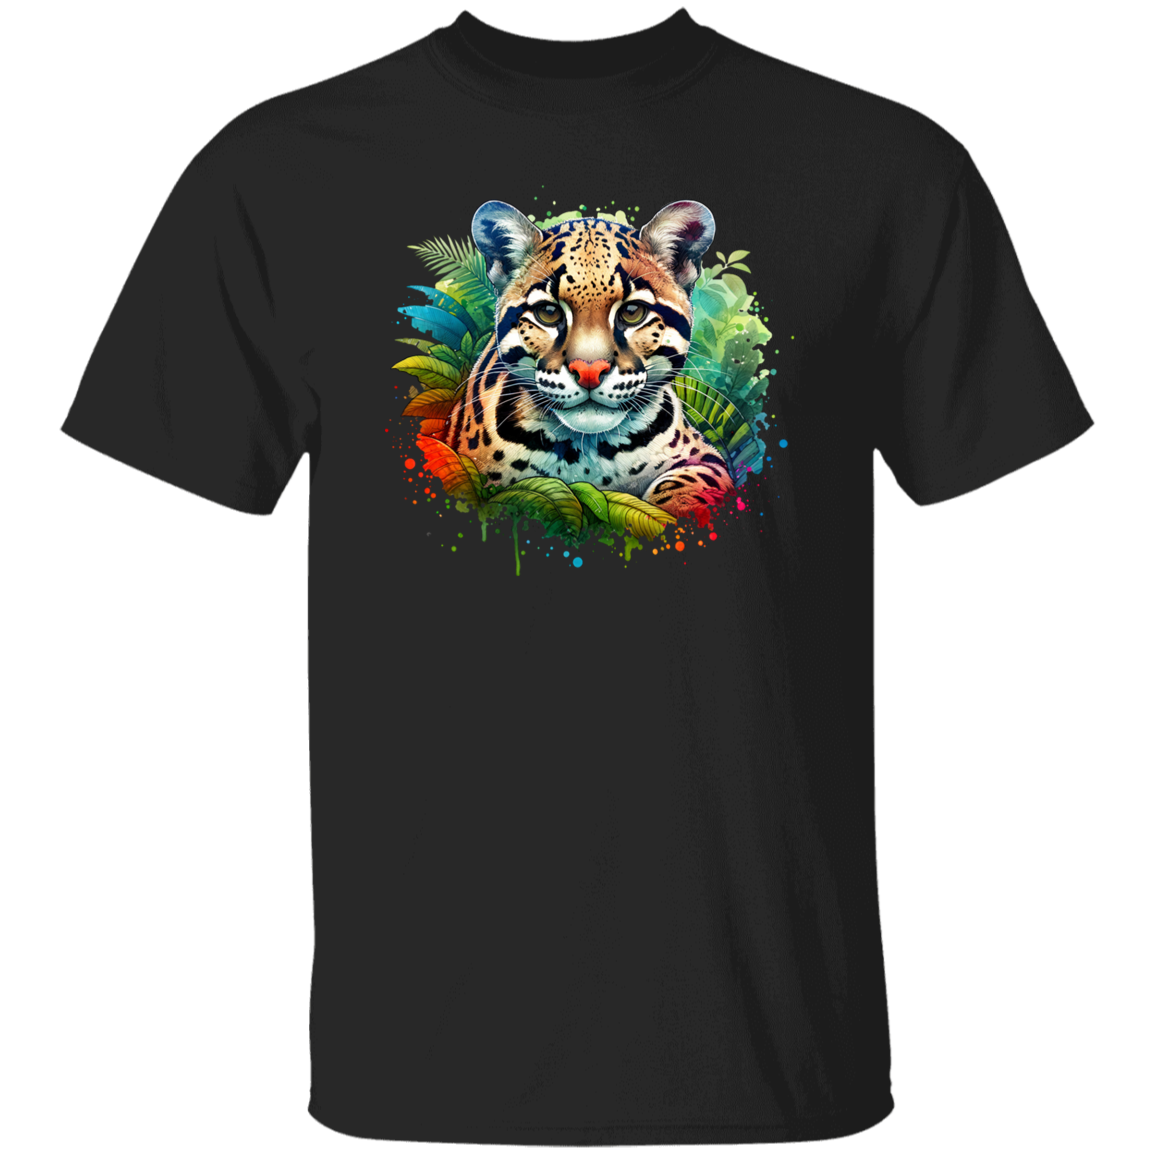 Clouded Leopard Portrait - T-shirts, Hoodies and Sweatshirts